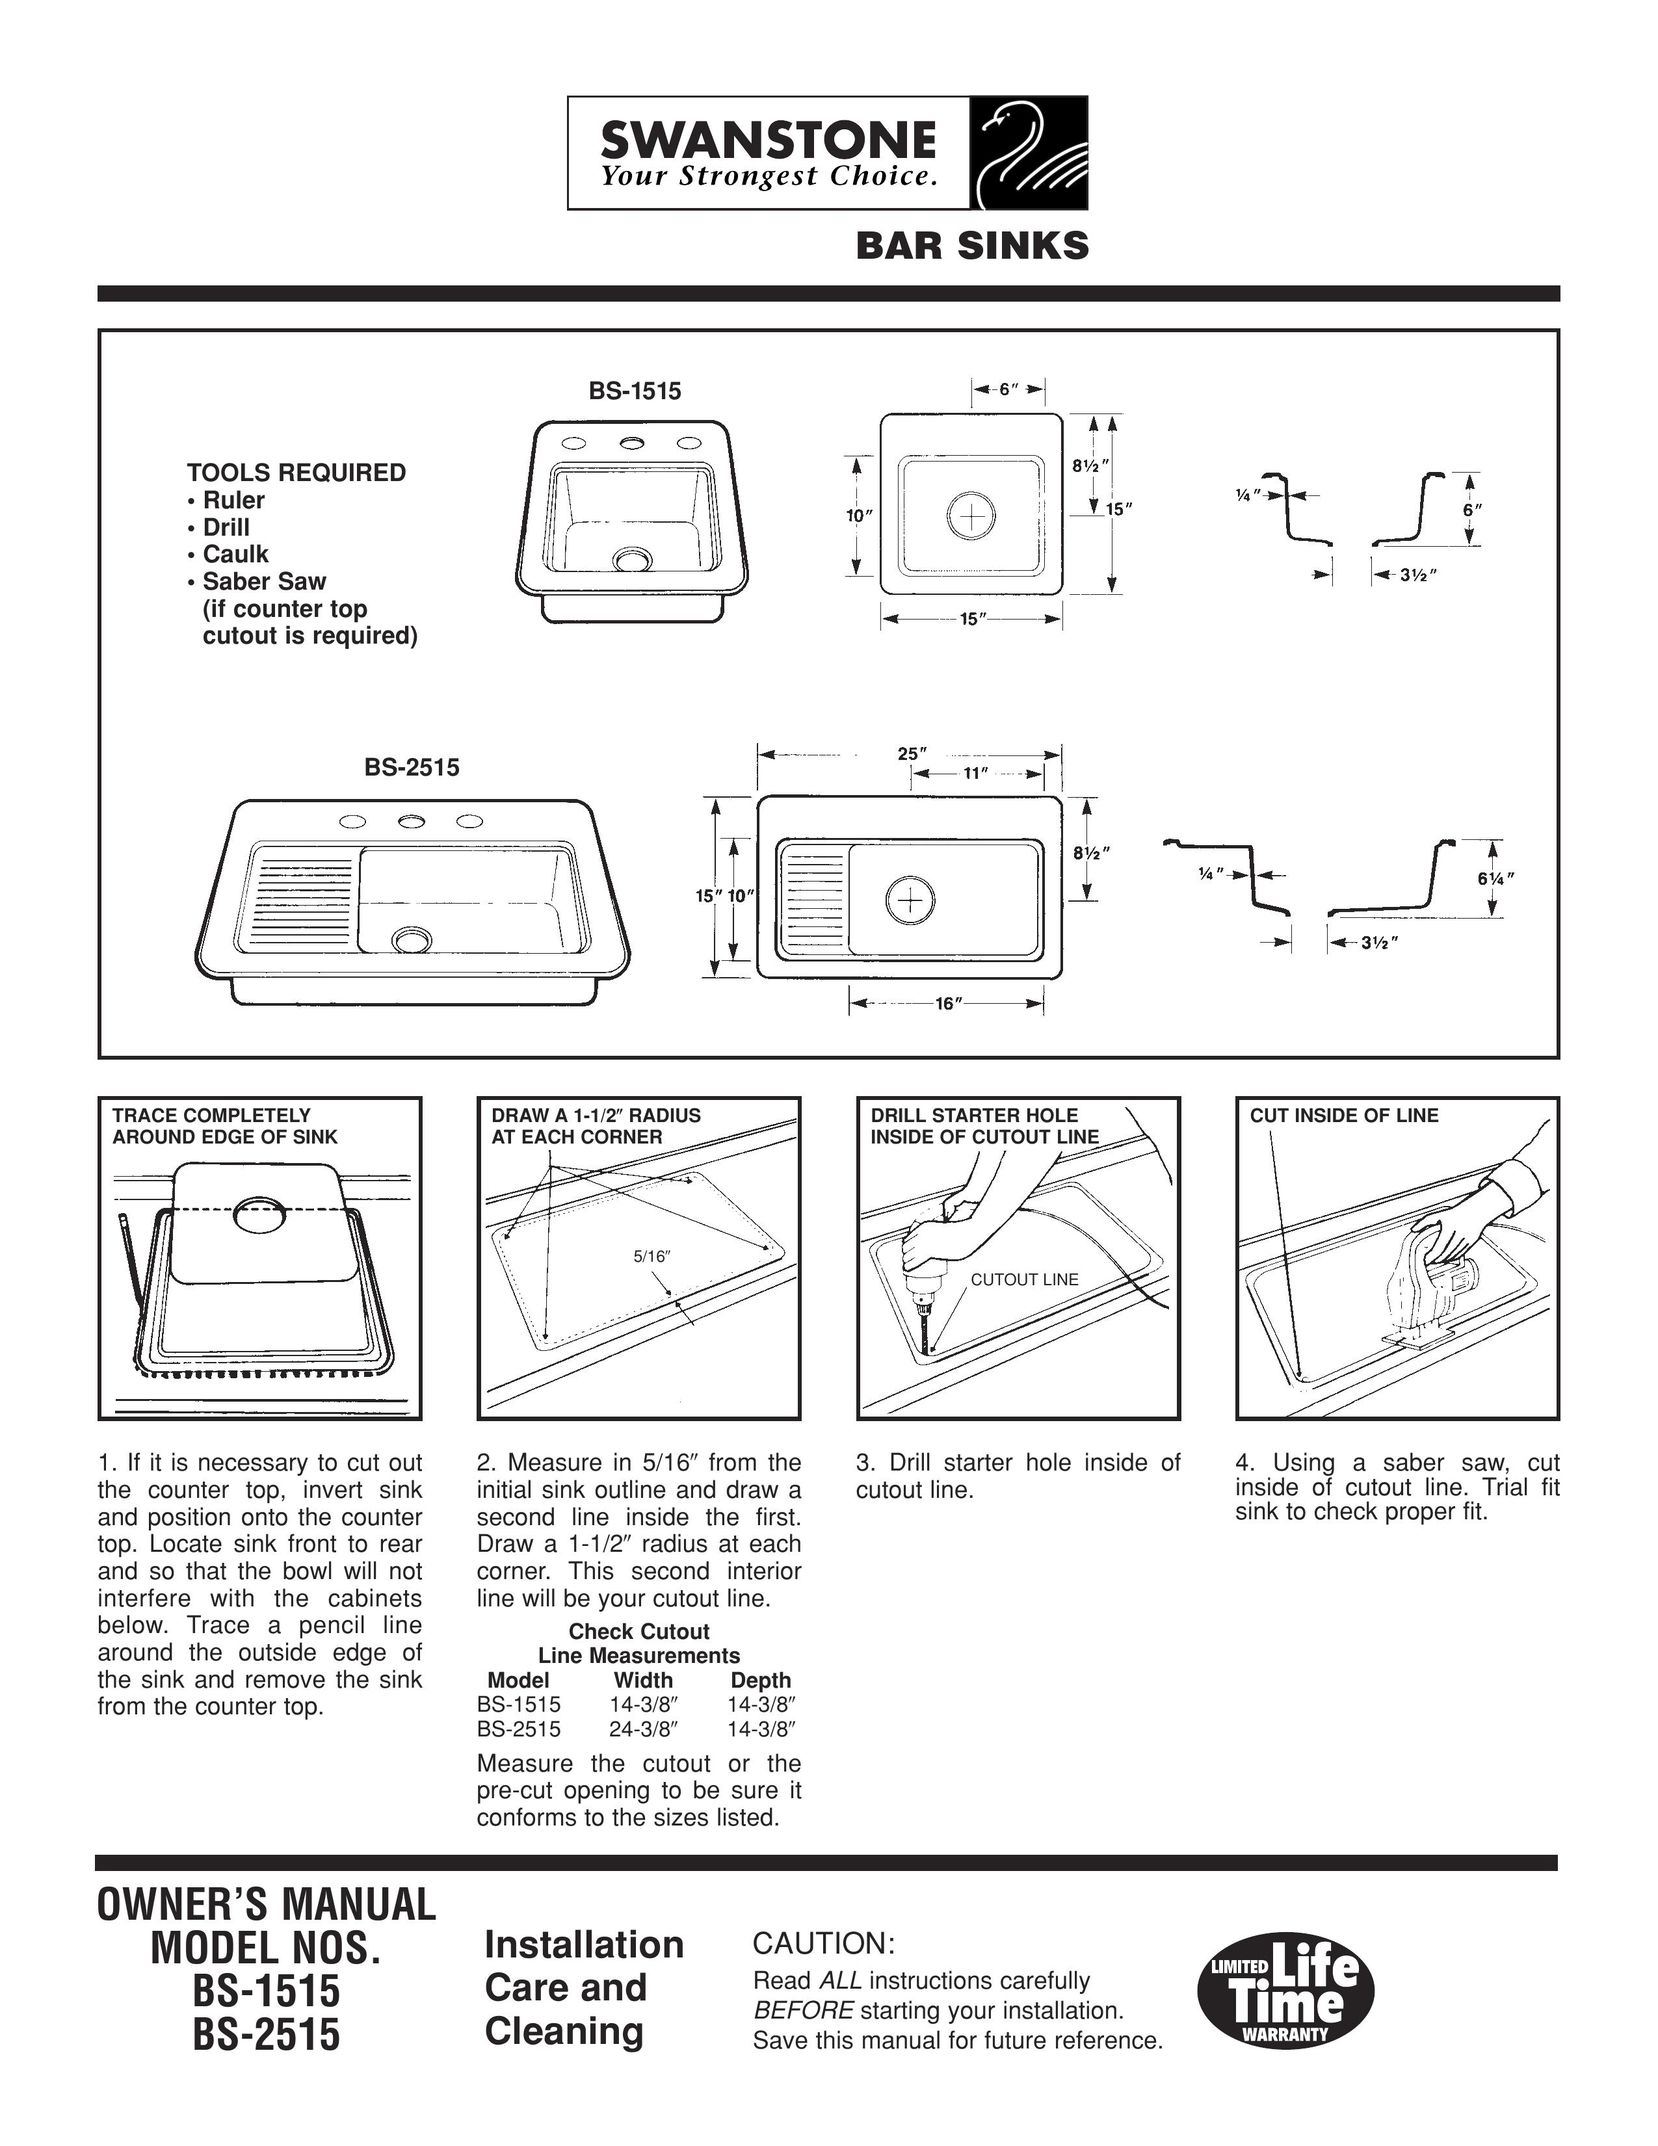 The Swan Corporation BS-2515 Indoor Furnishings User Manual